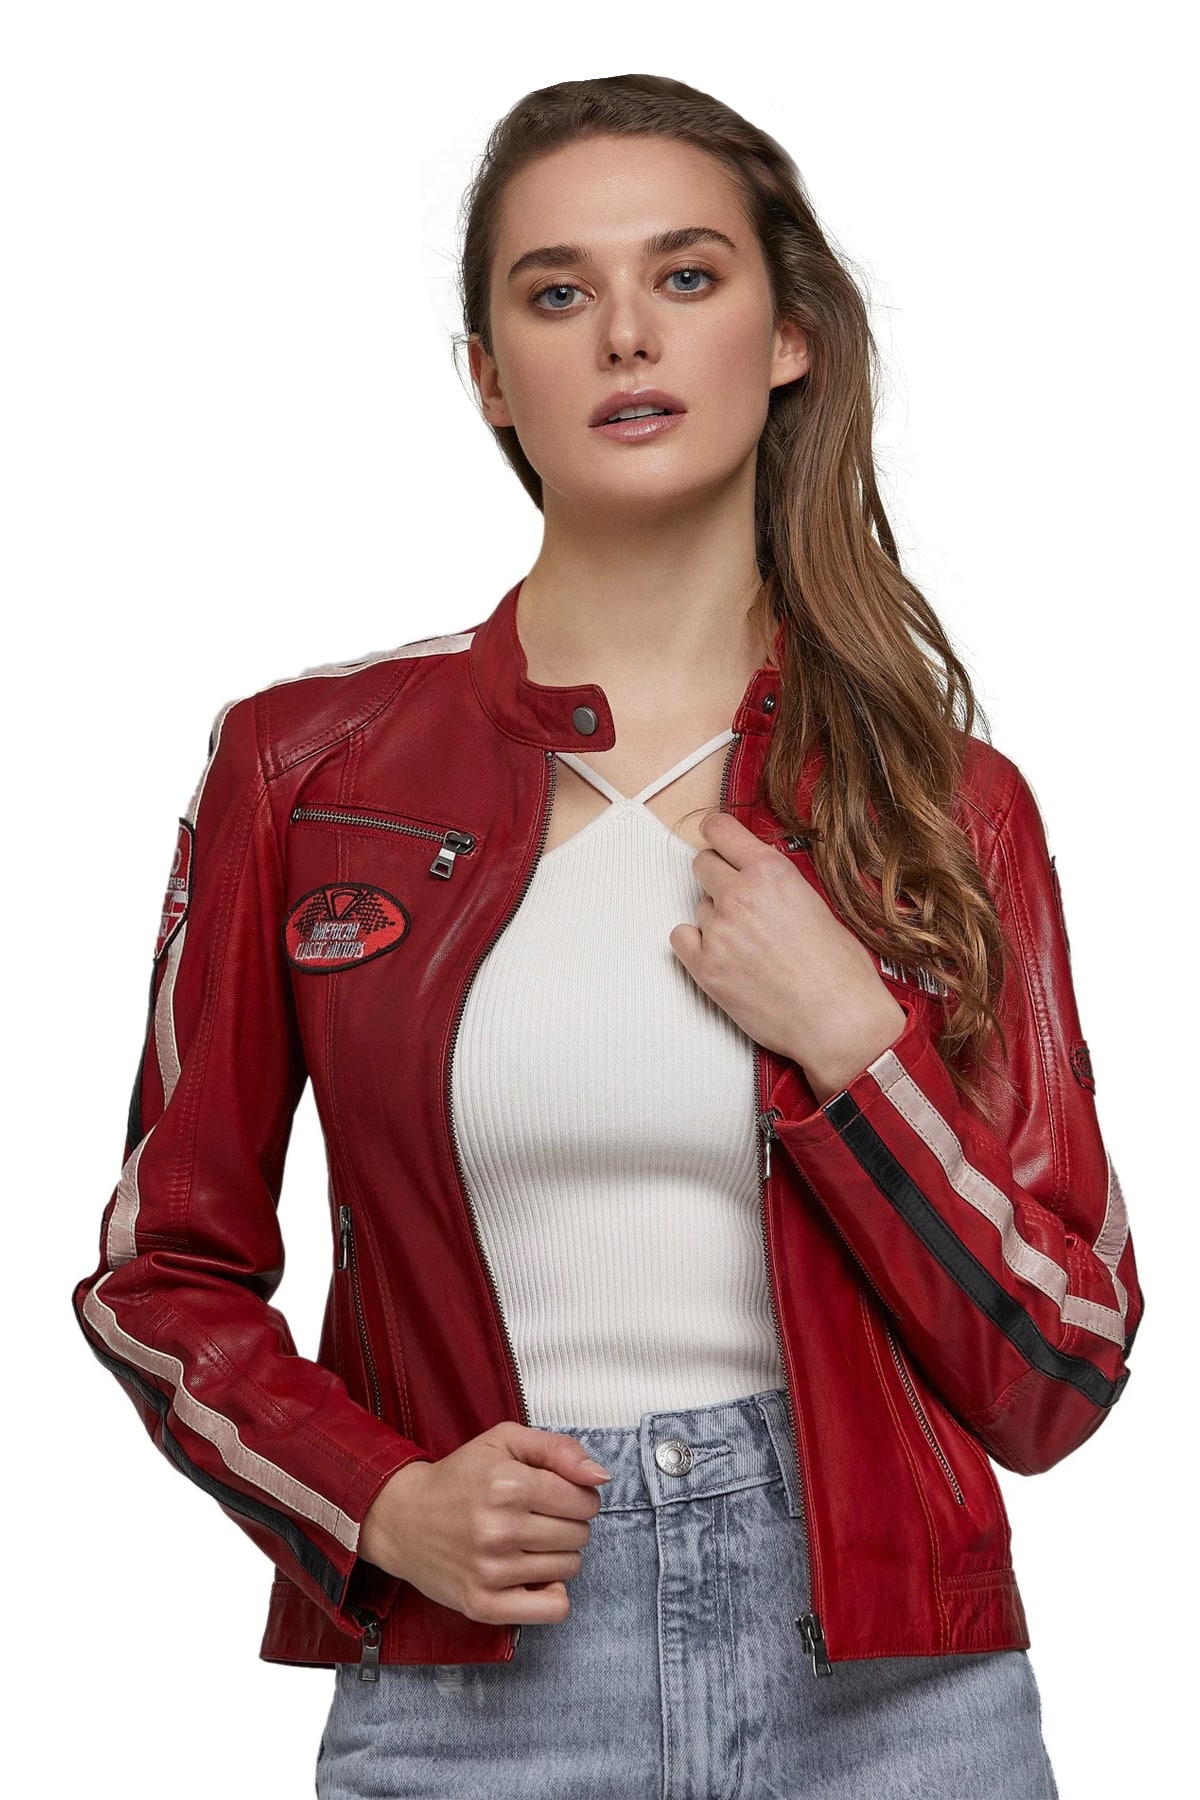 Sierra Skye Egan Women's 100 % Real Dark Red Leather Biker Style Jacket